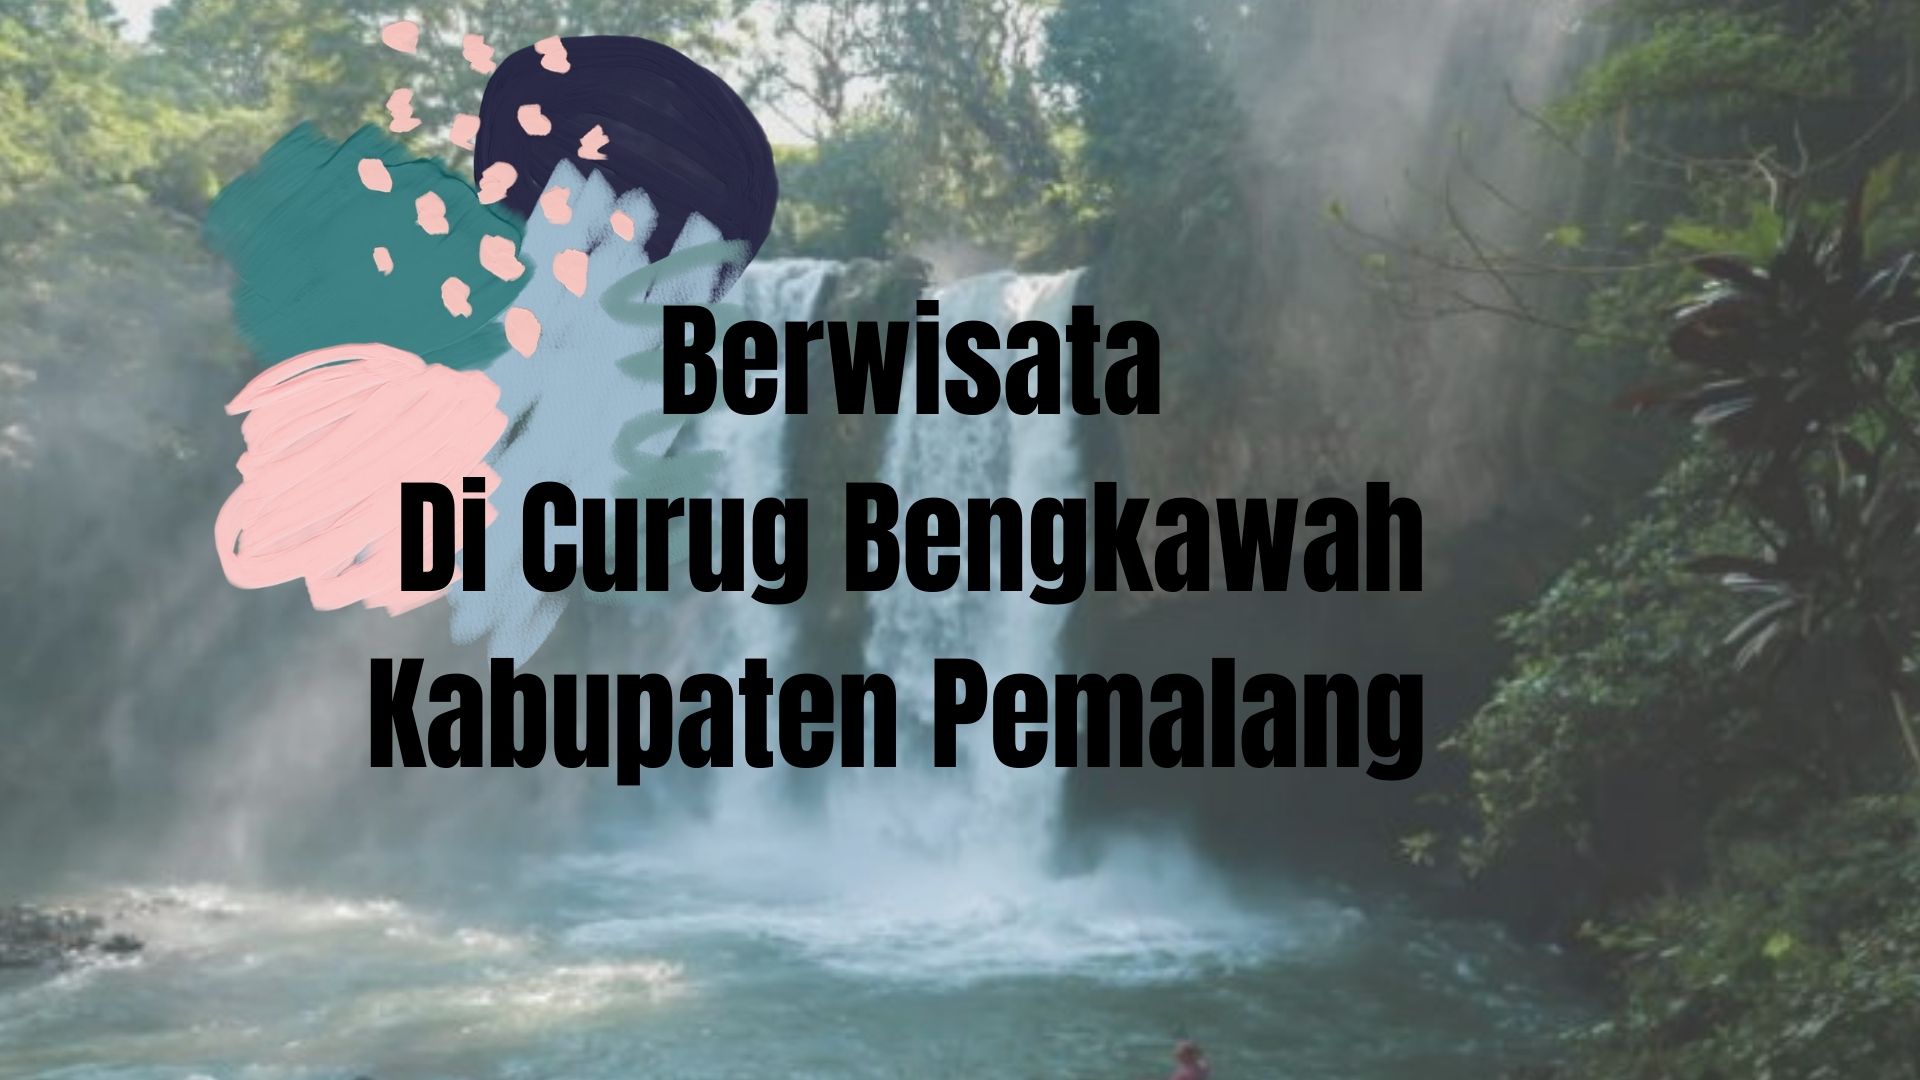 You are currently viewing Berwisata Di Curug Bengkawah Kabupaten Pemalang